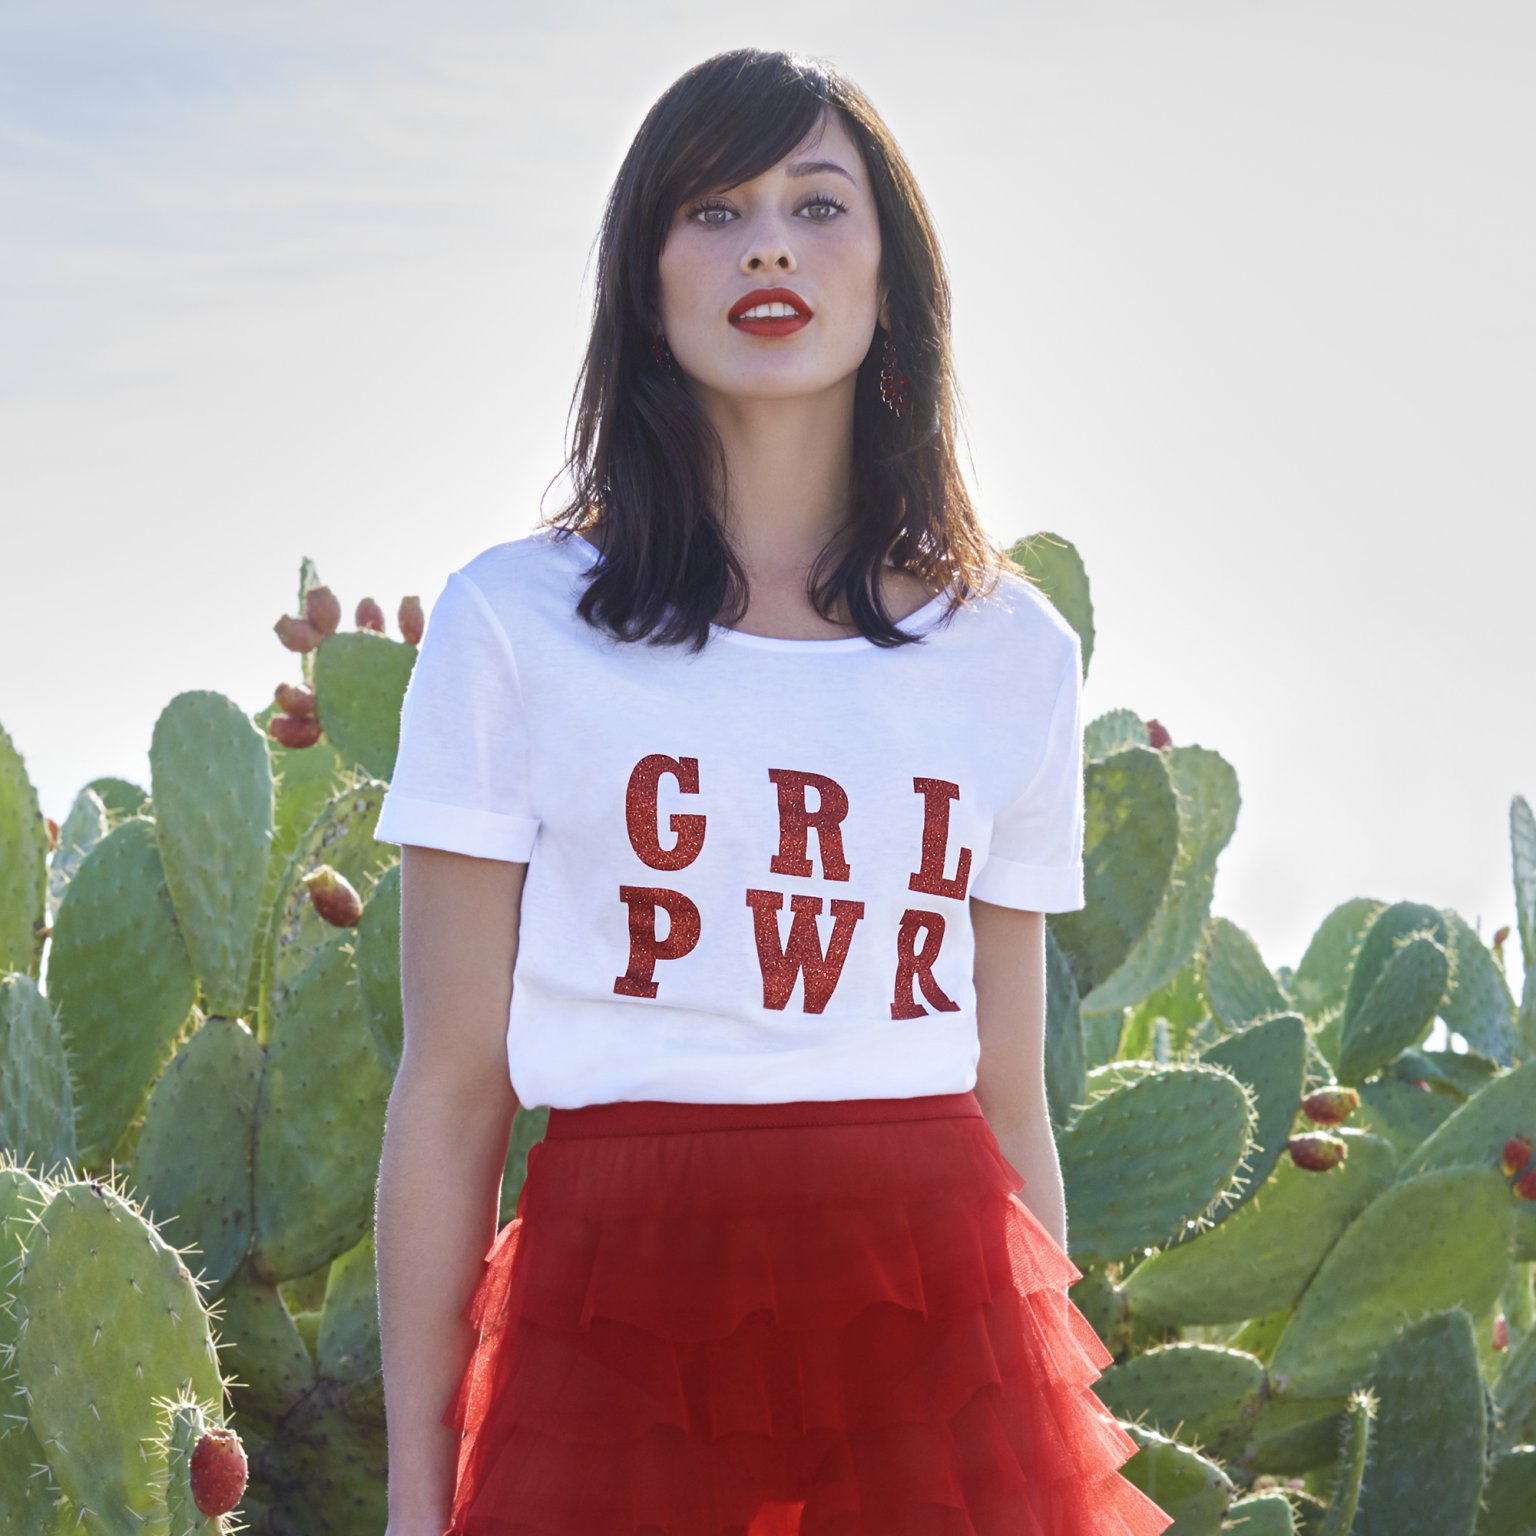 06-t-shirt-feministe-folkr-naf-naf-girl-power-tee-shirt